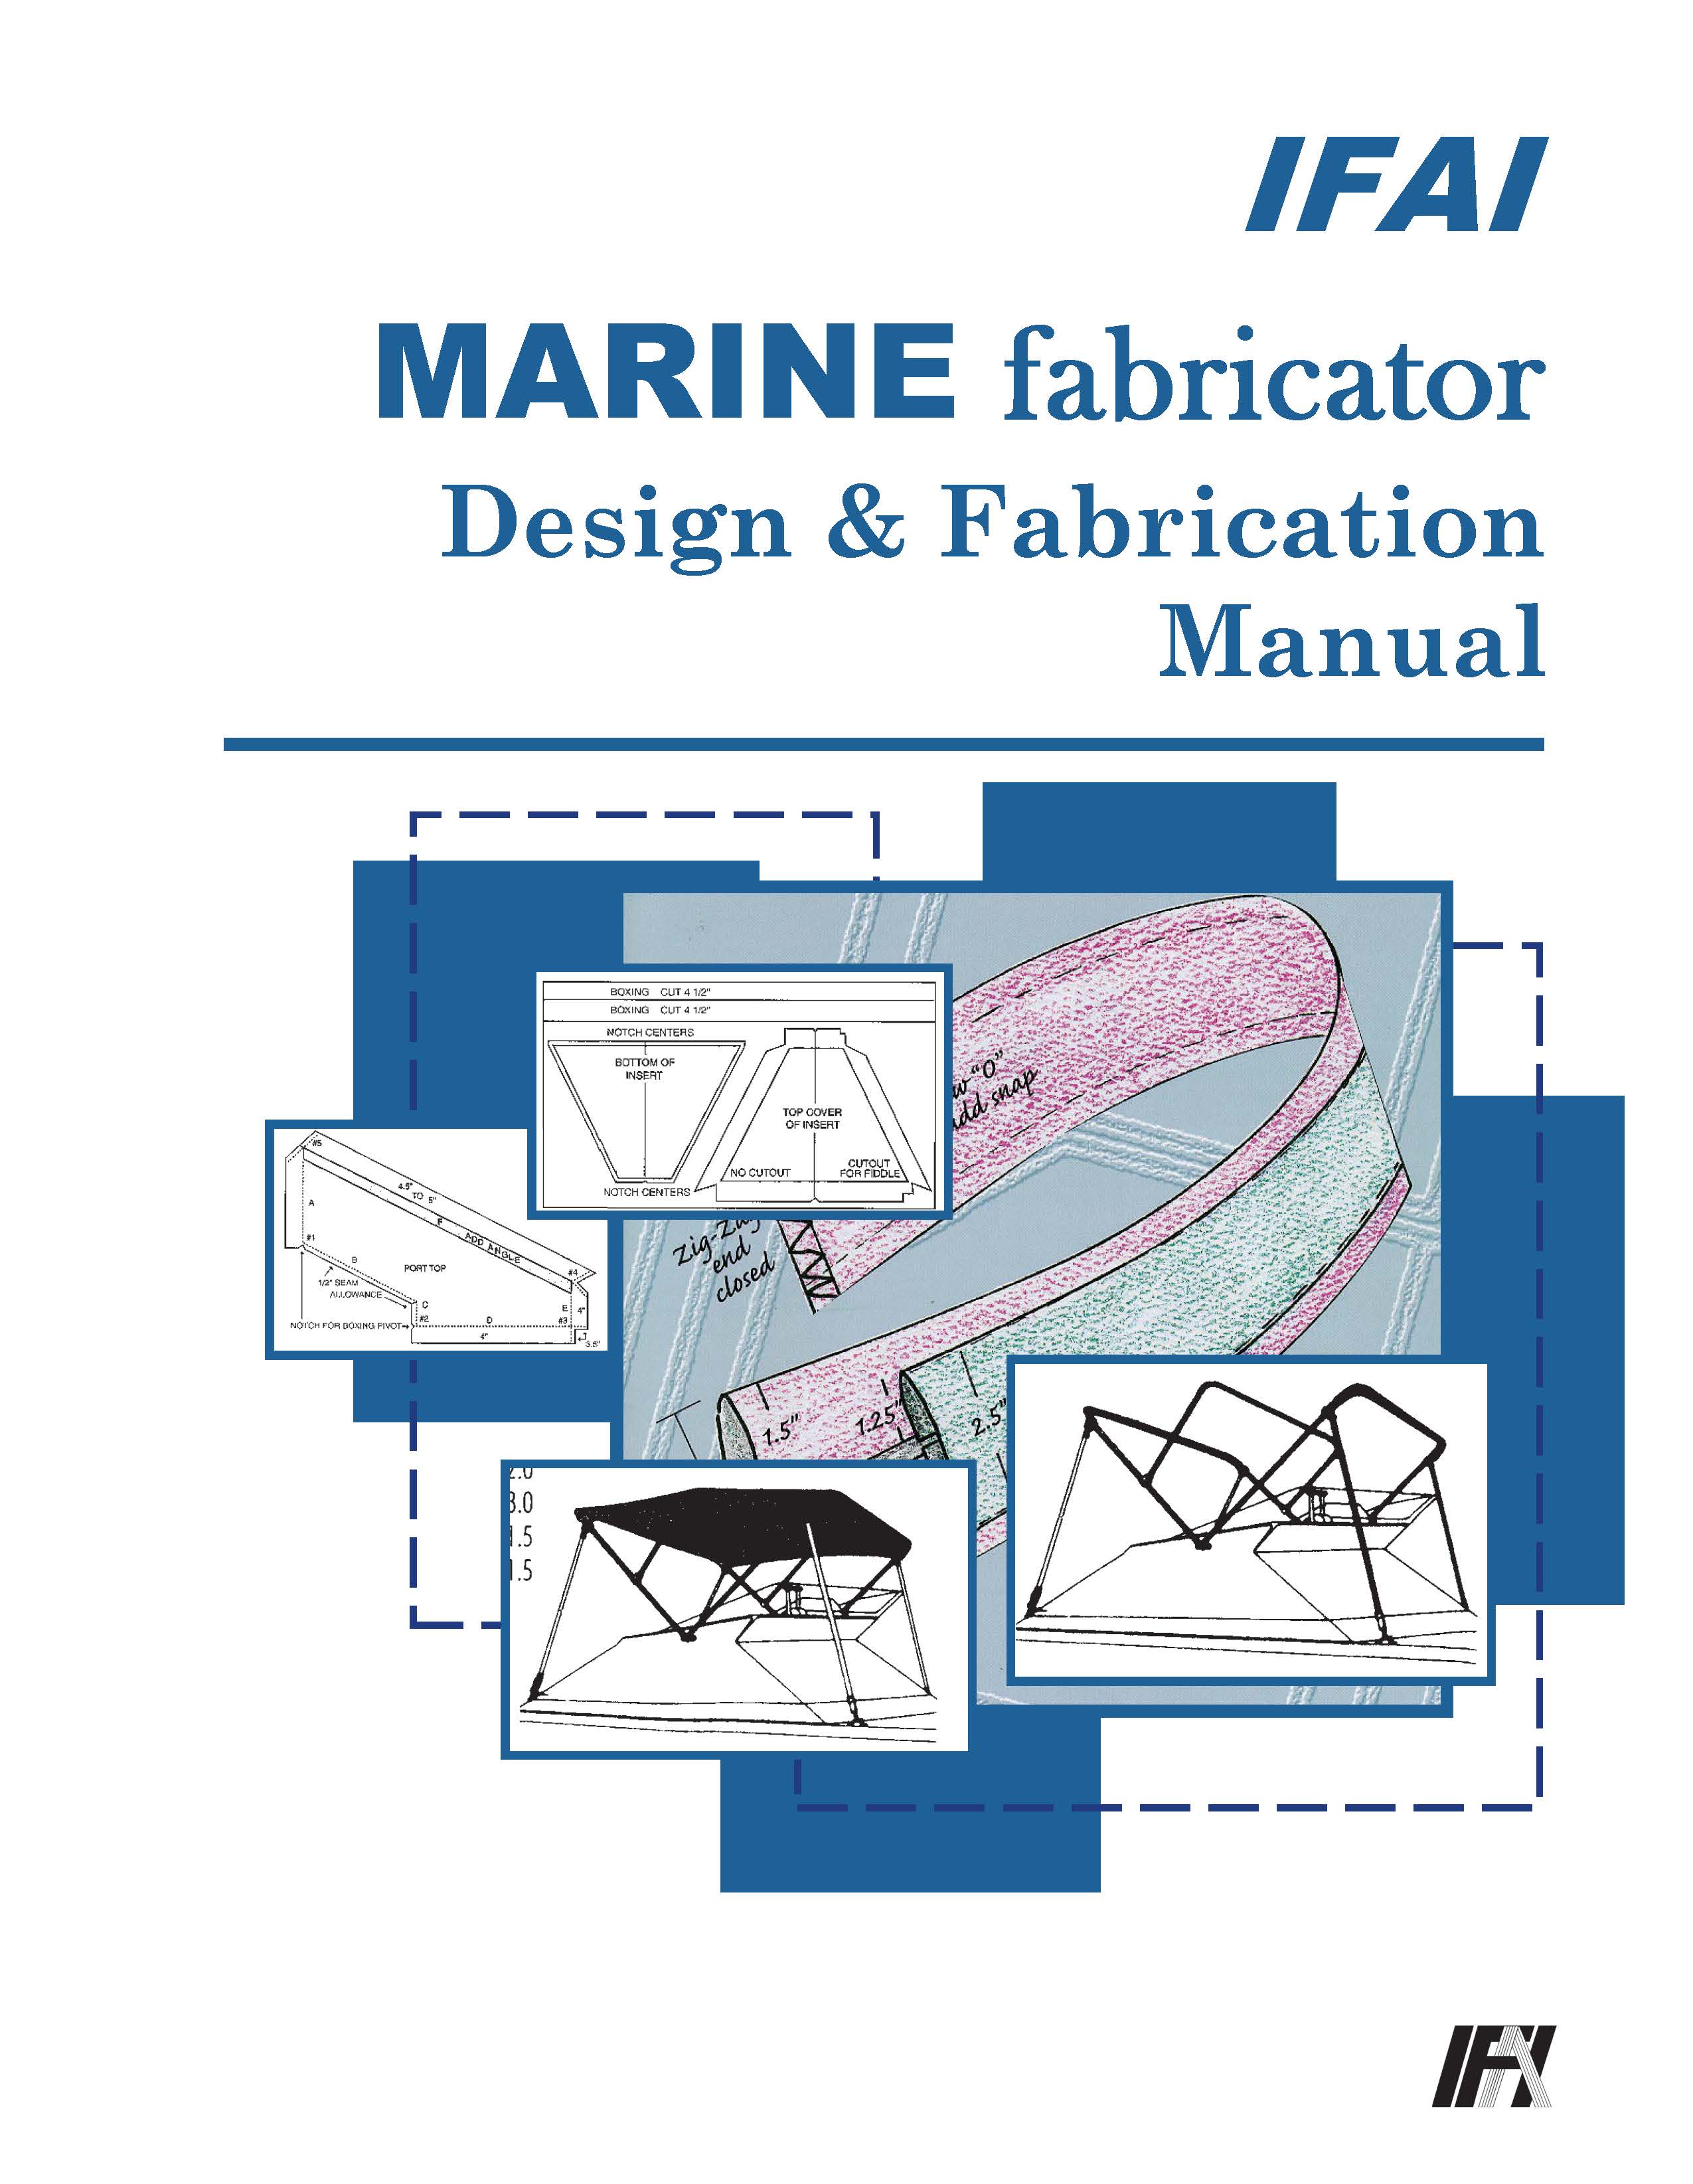 Marine Fabricator Design & Fabrication Manual Digital Copy